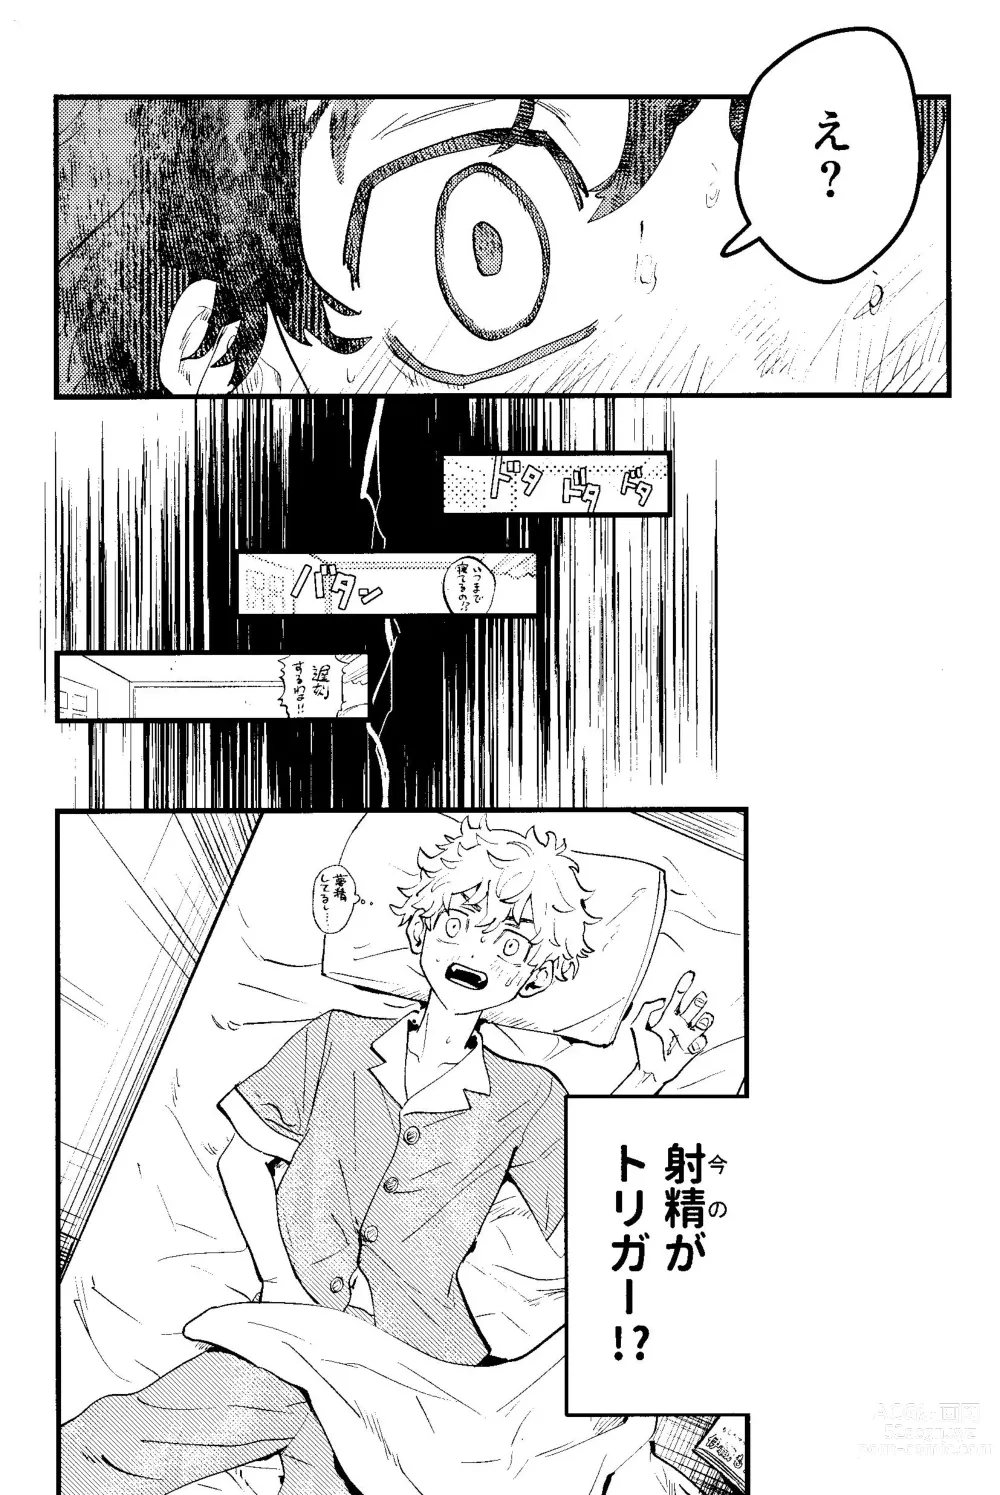 Page 33 of doujinshi Pink impulse